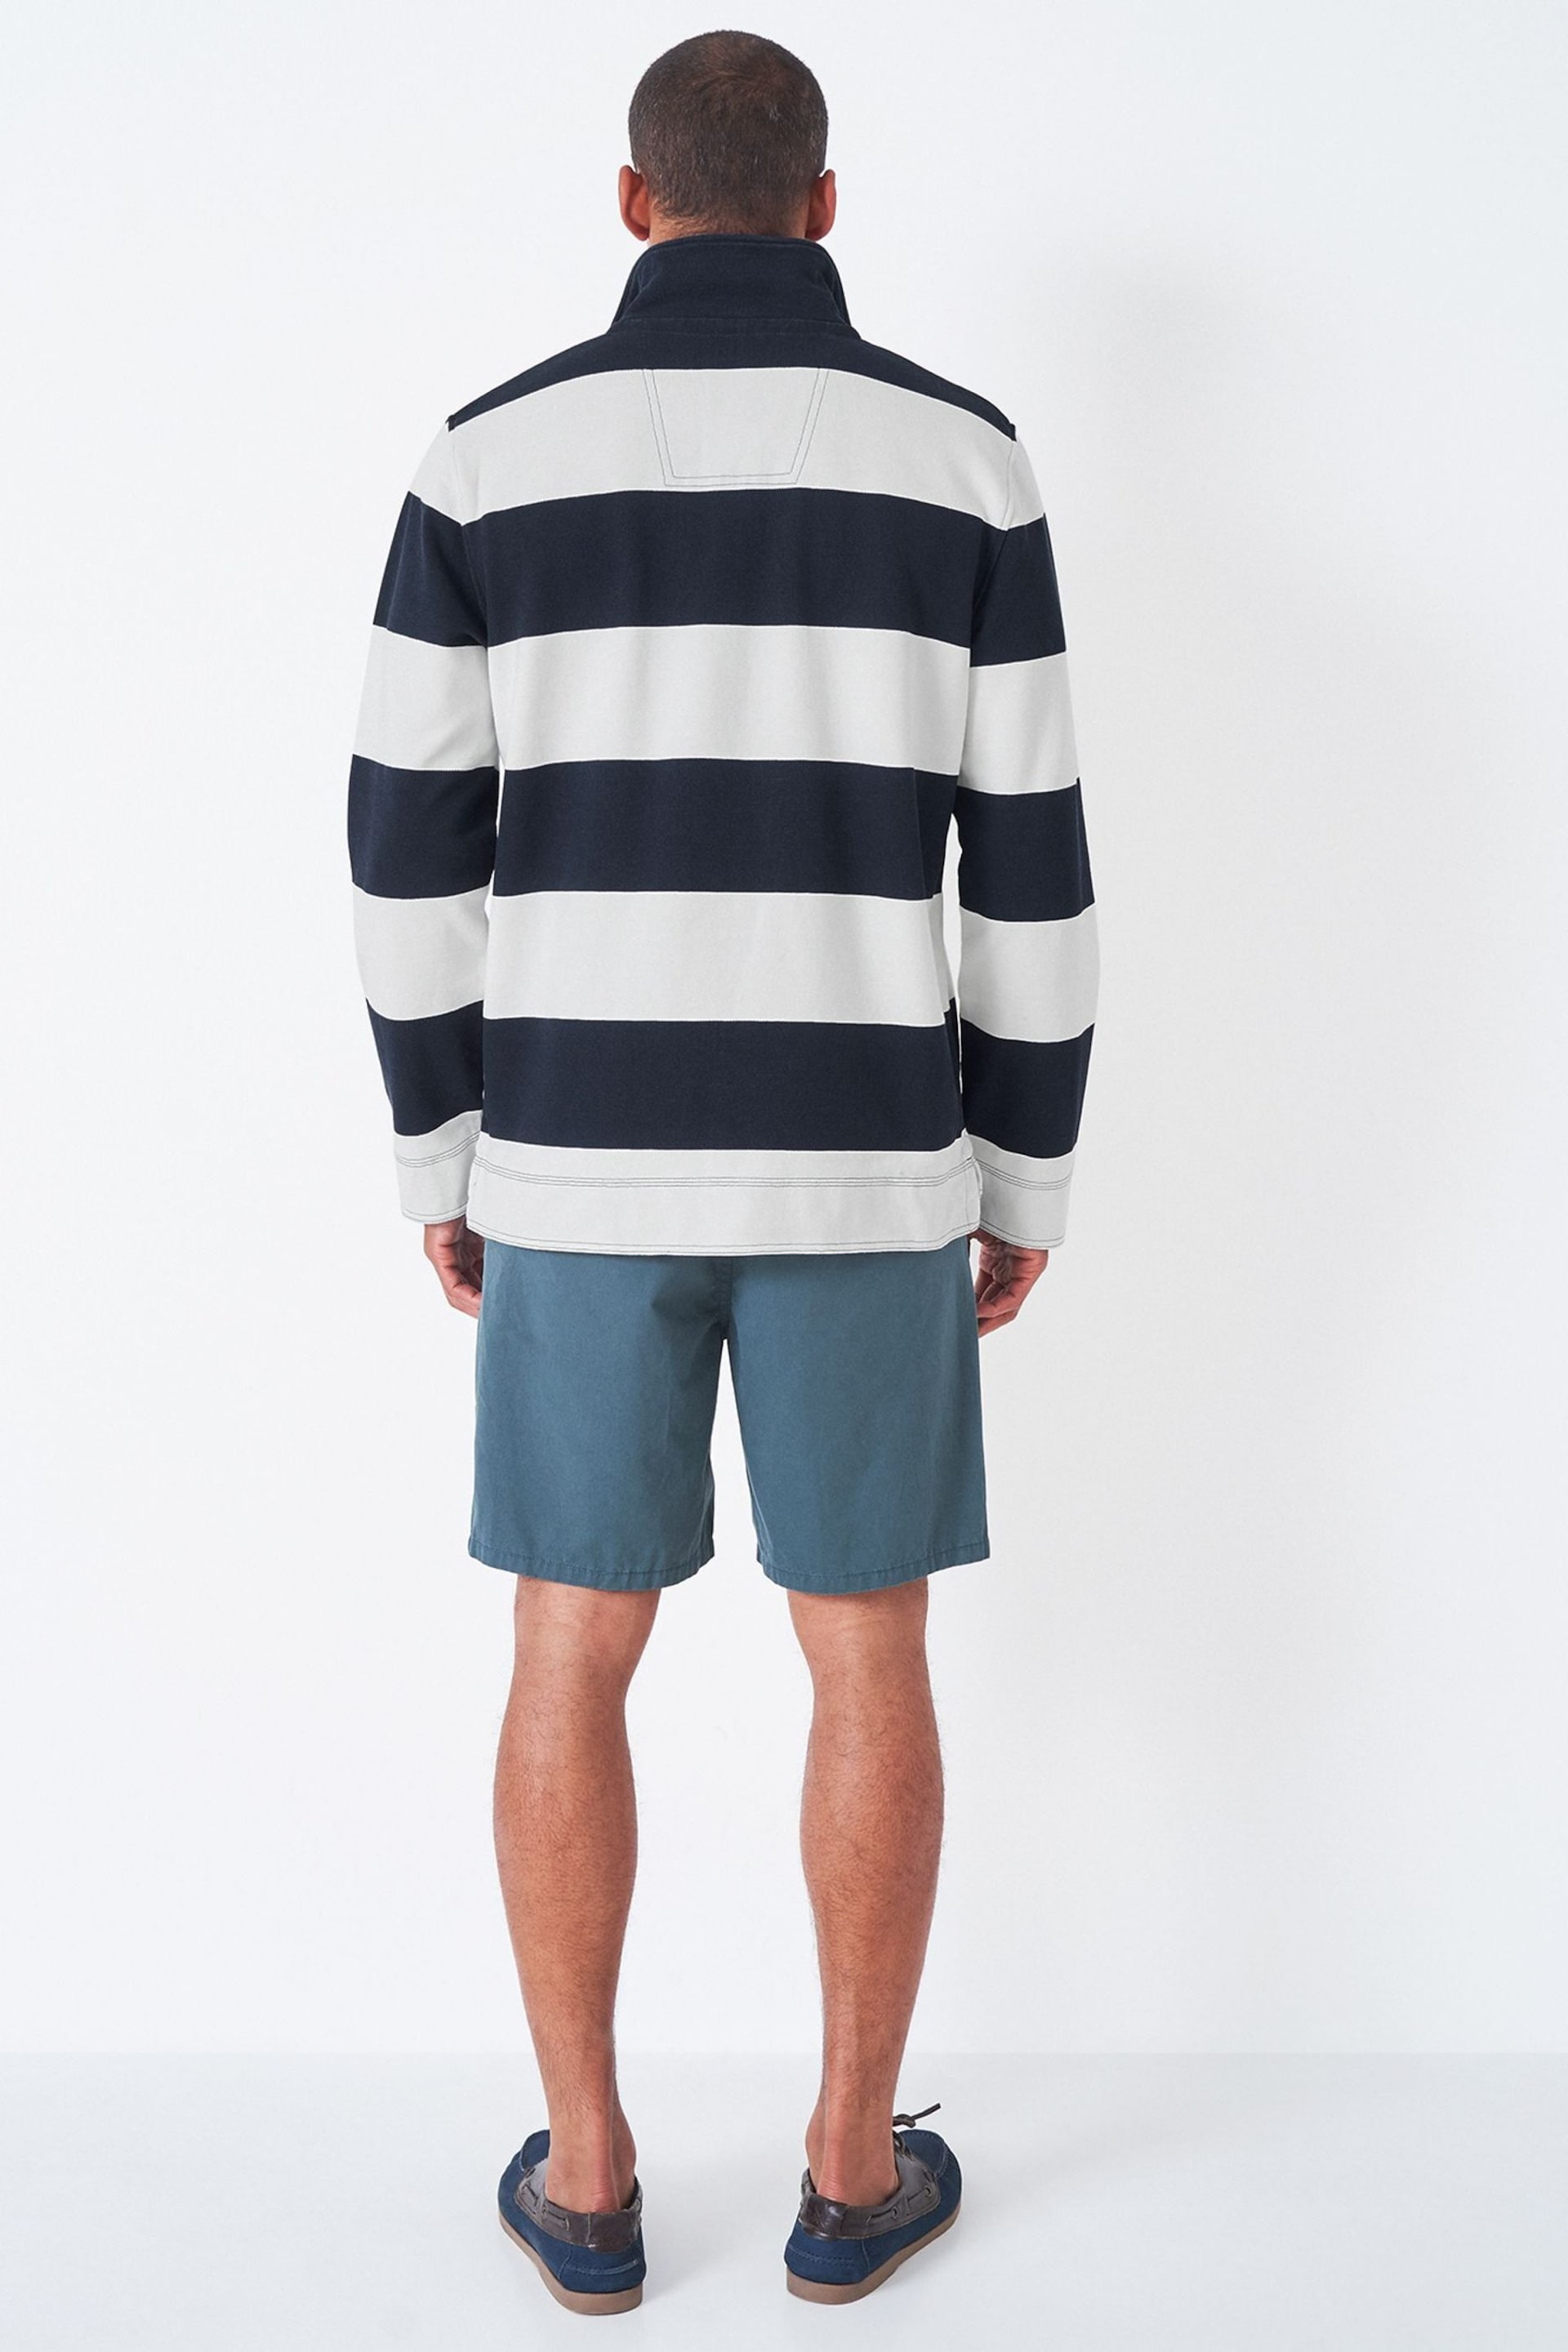 Crew Clothing Stripe Padstow Cotton Piqué Sweatshirt - Image 2 of 4